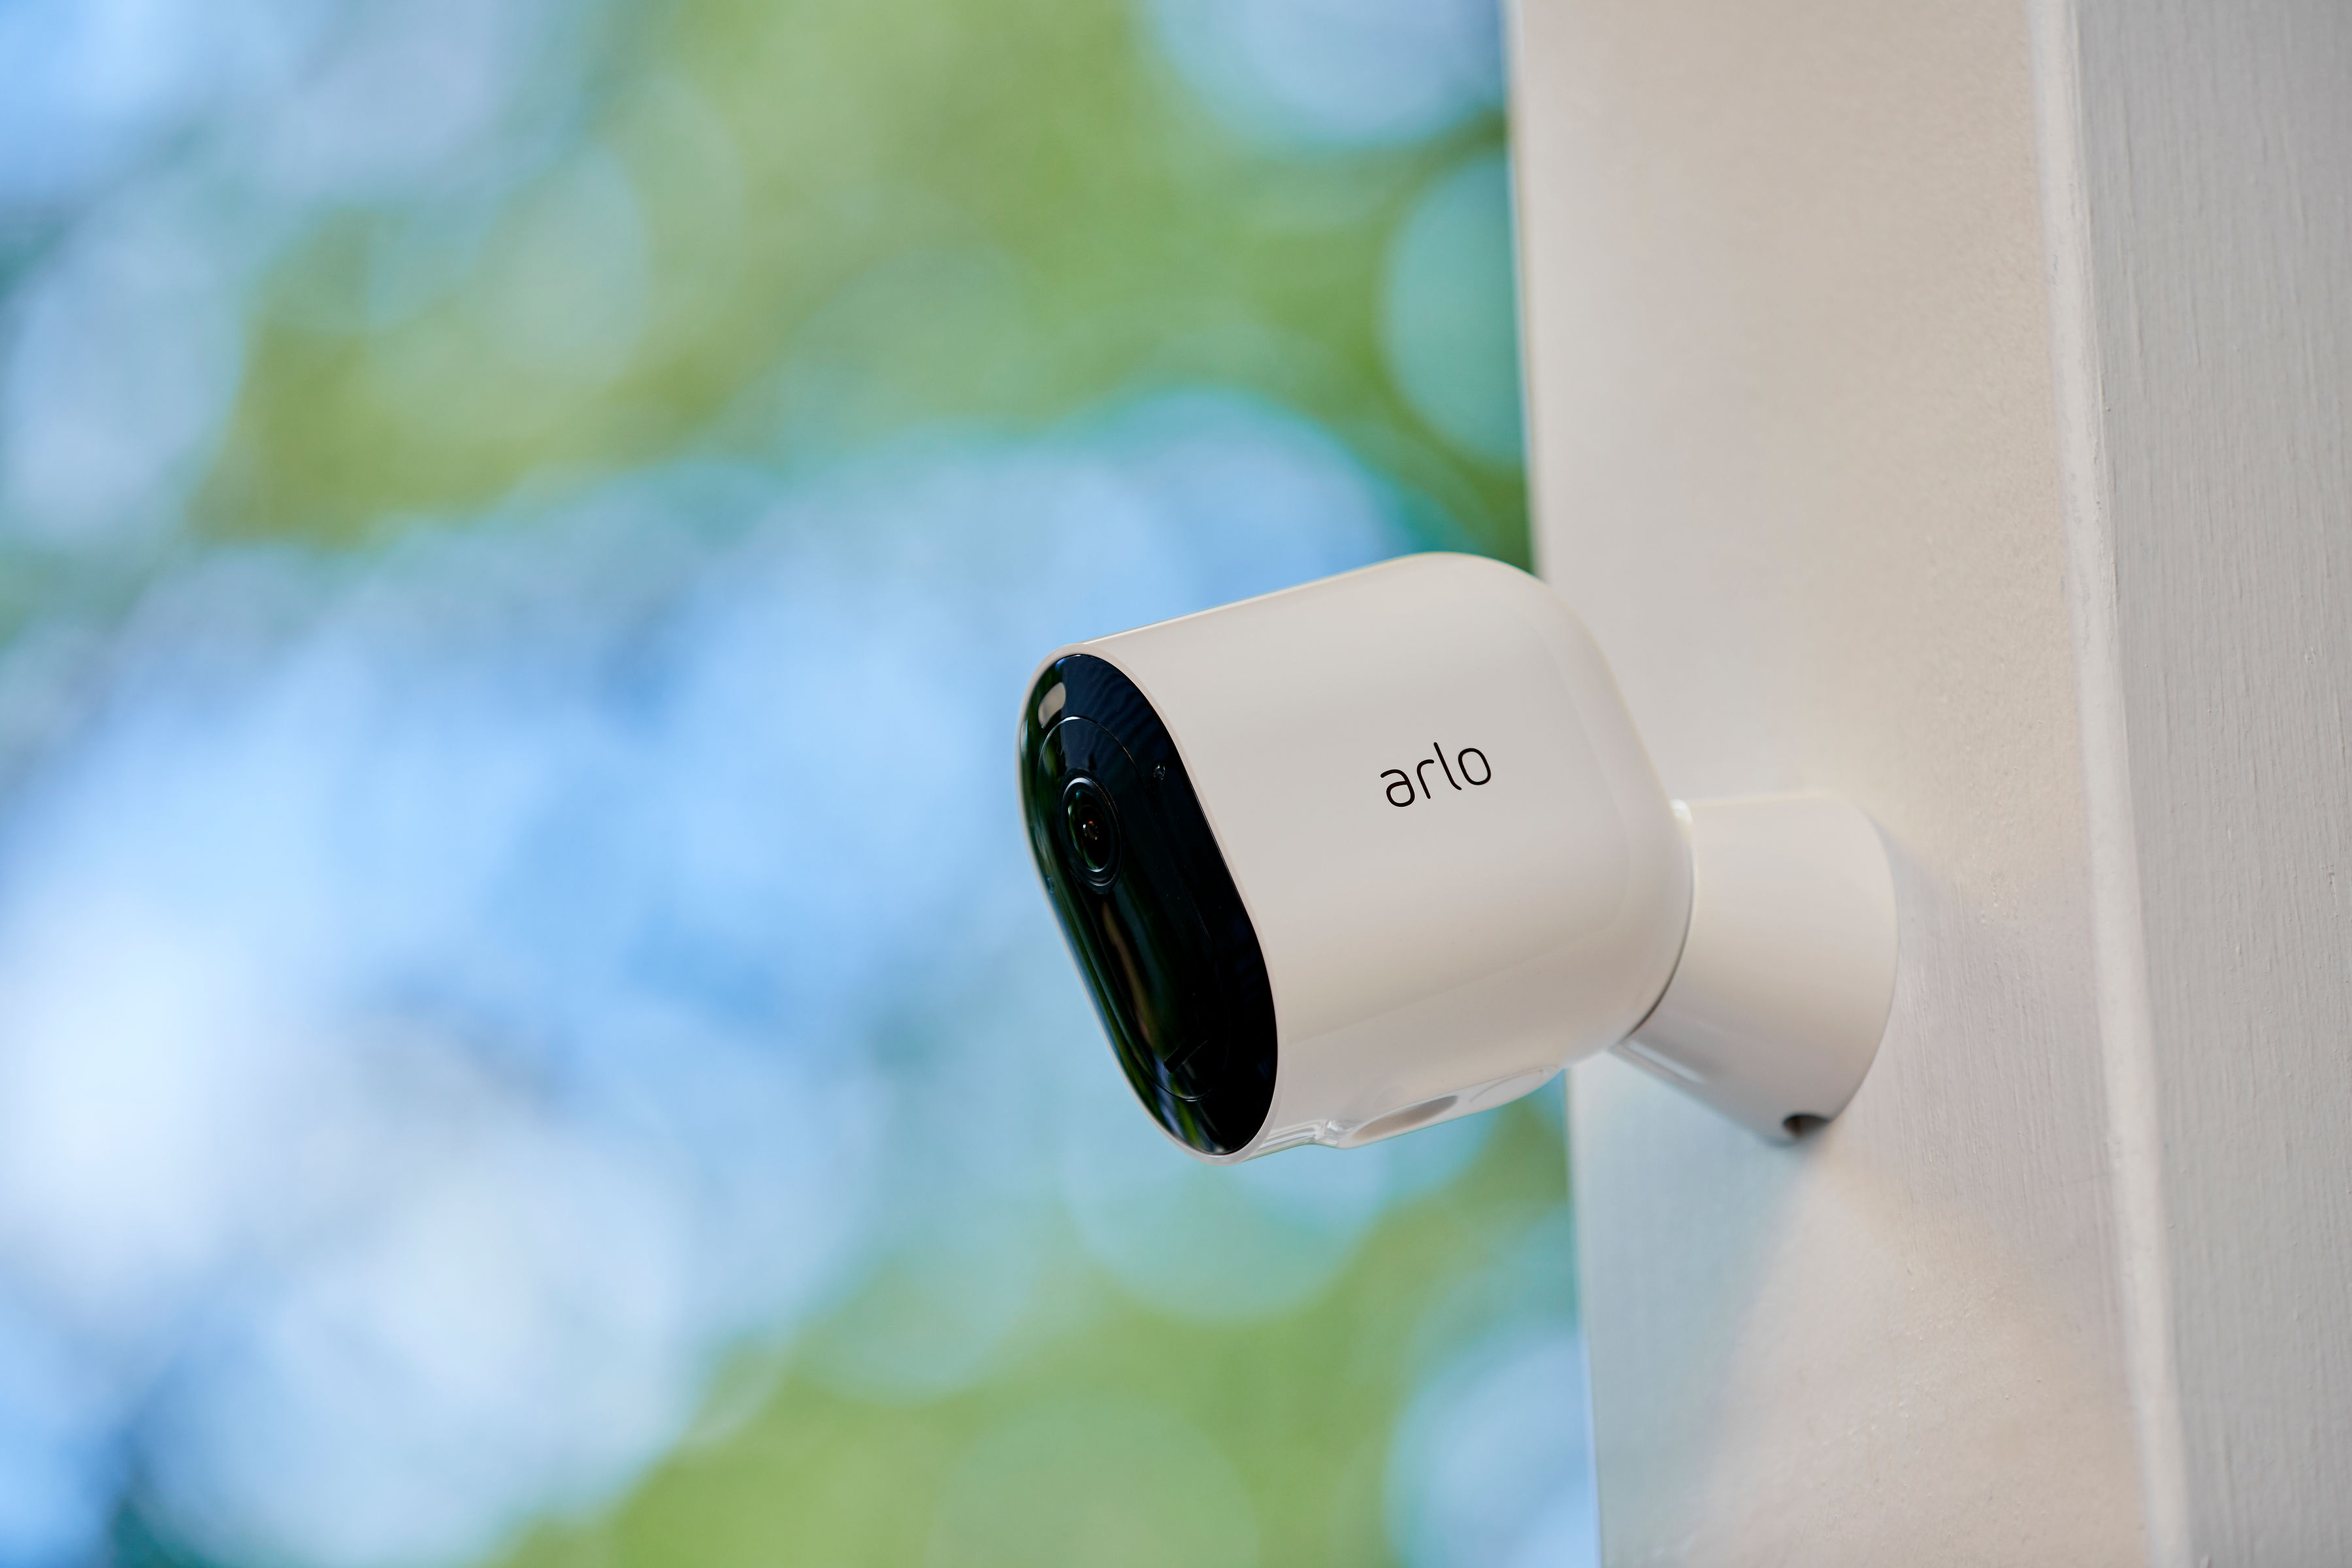 تقييمات 14 نوفمبر ، 2021 0 تعليقات Arlo Pro 4 Spotlight Review: Security Camera With Ease